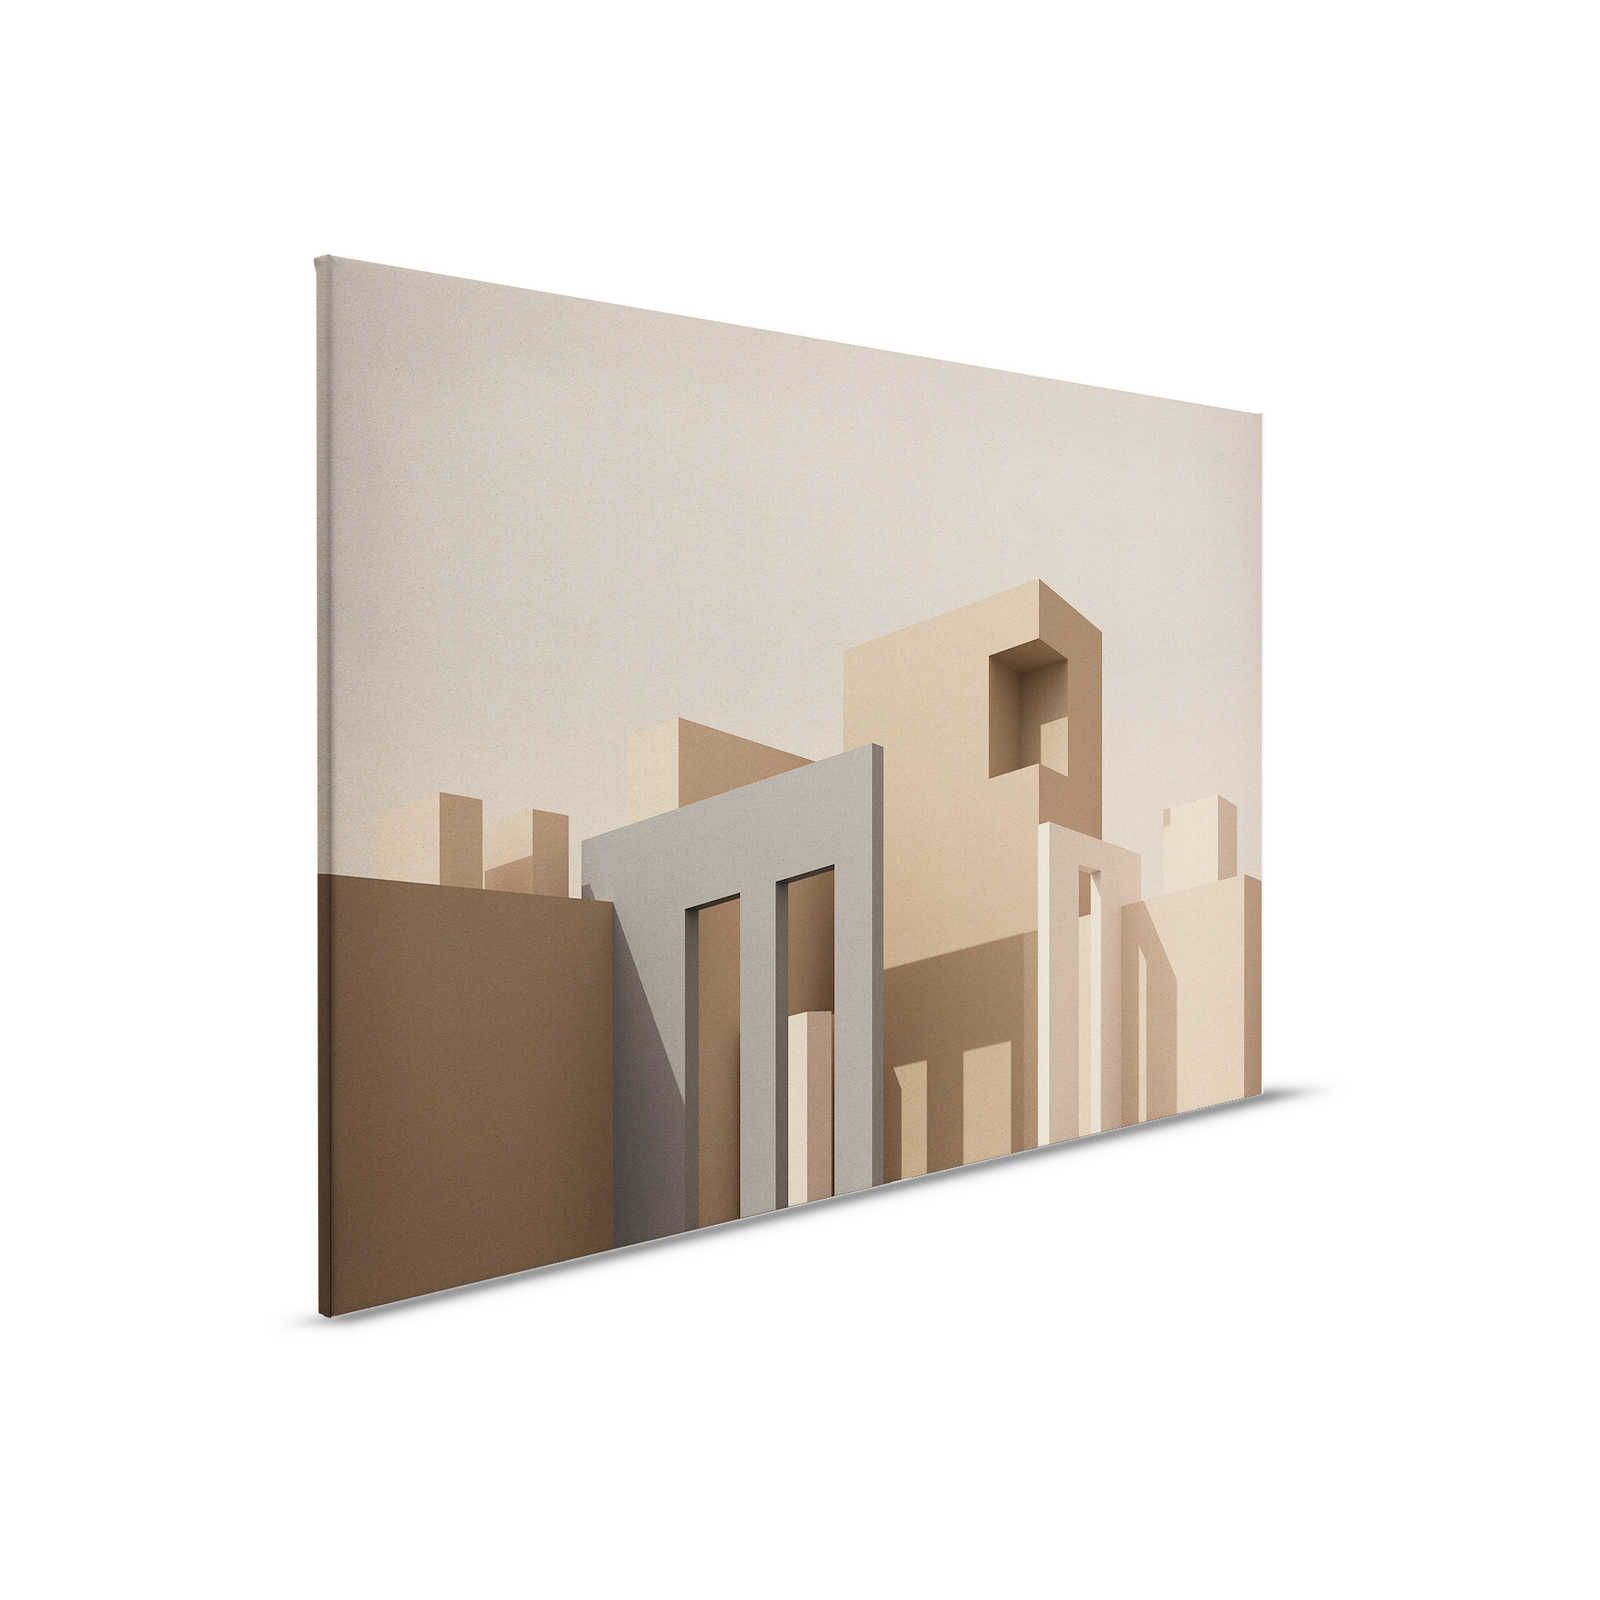         Tanger 1 - Leinwandbild Architektur Cube Design in Beige & Grau – 0,90 m x 0,60 m
    